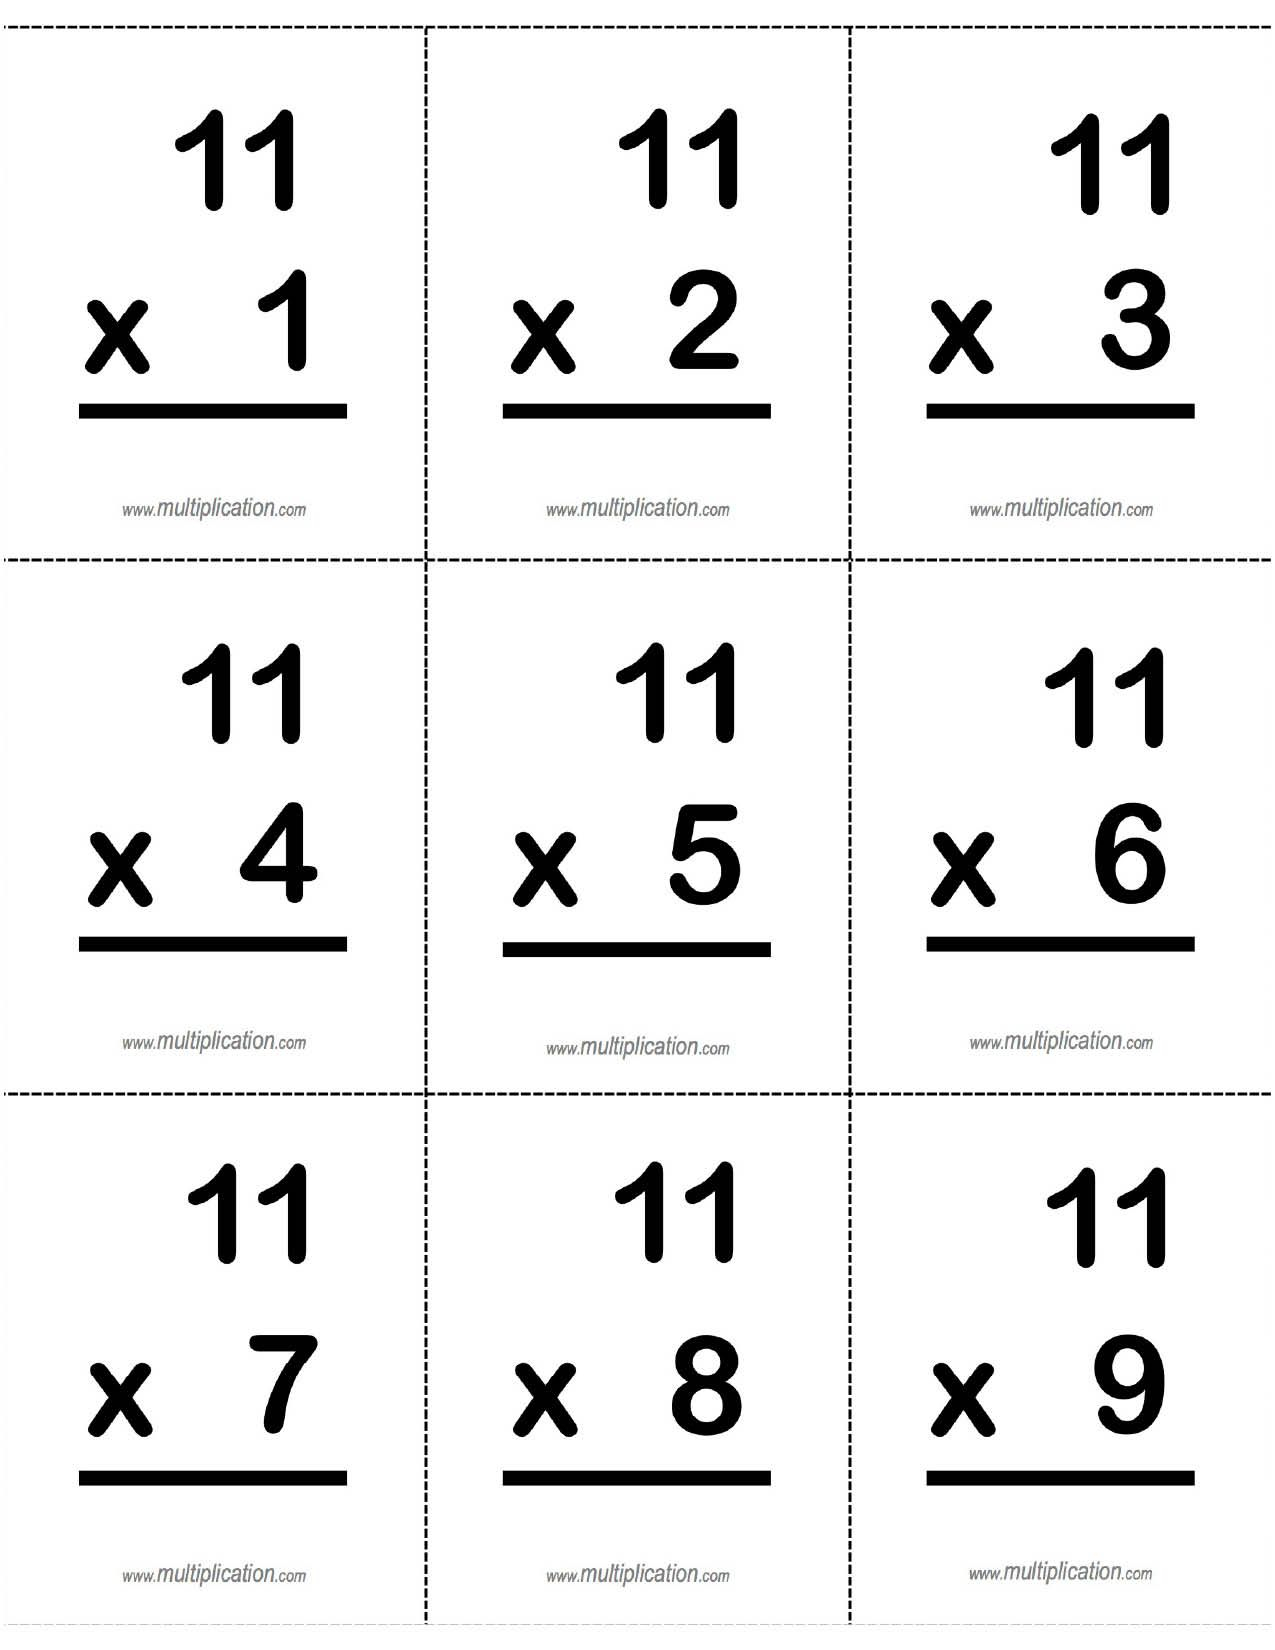 multiplication-flash-cards-5s-printable-multiplication-flash-cards